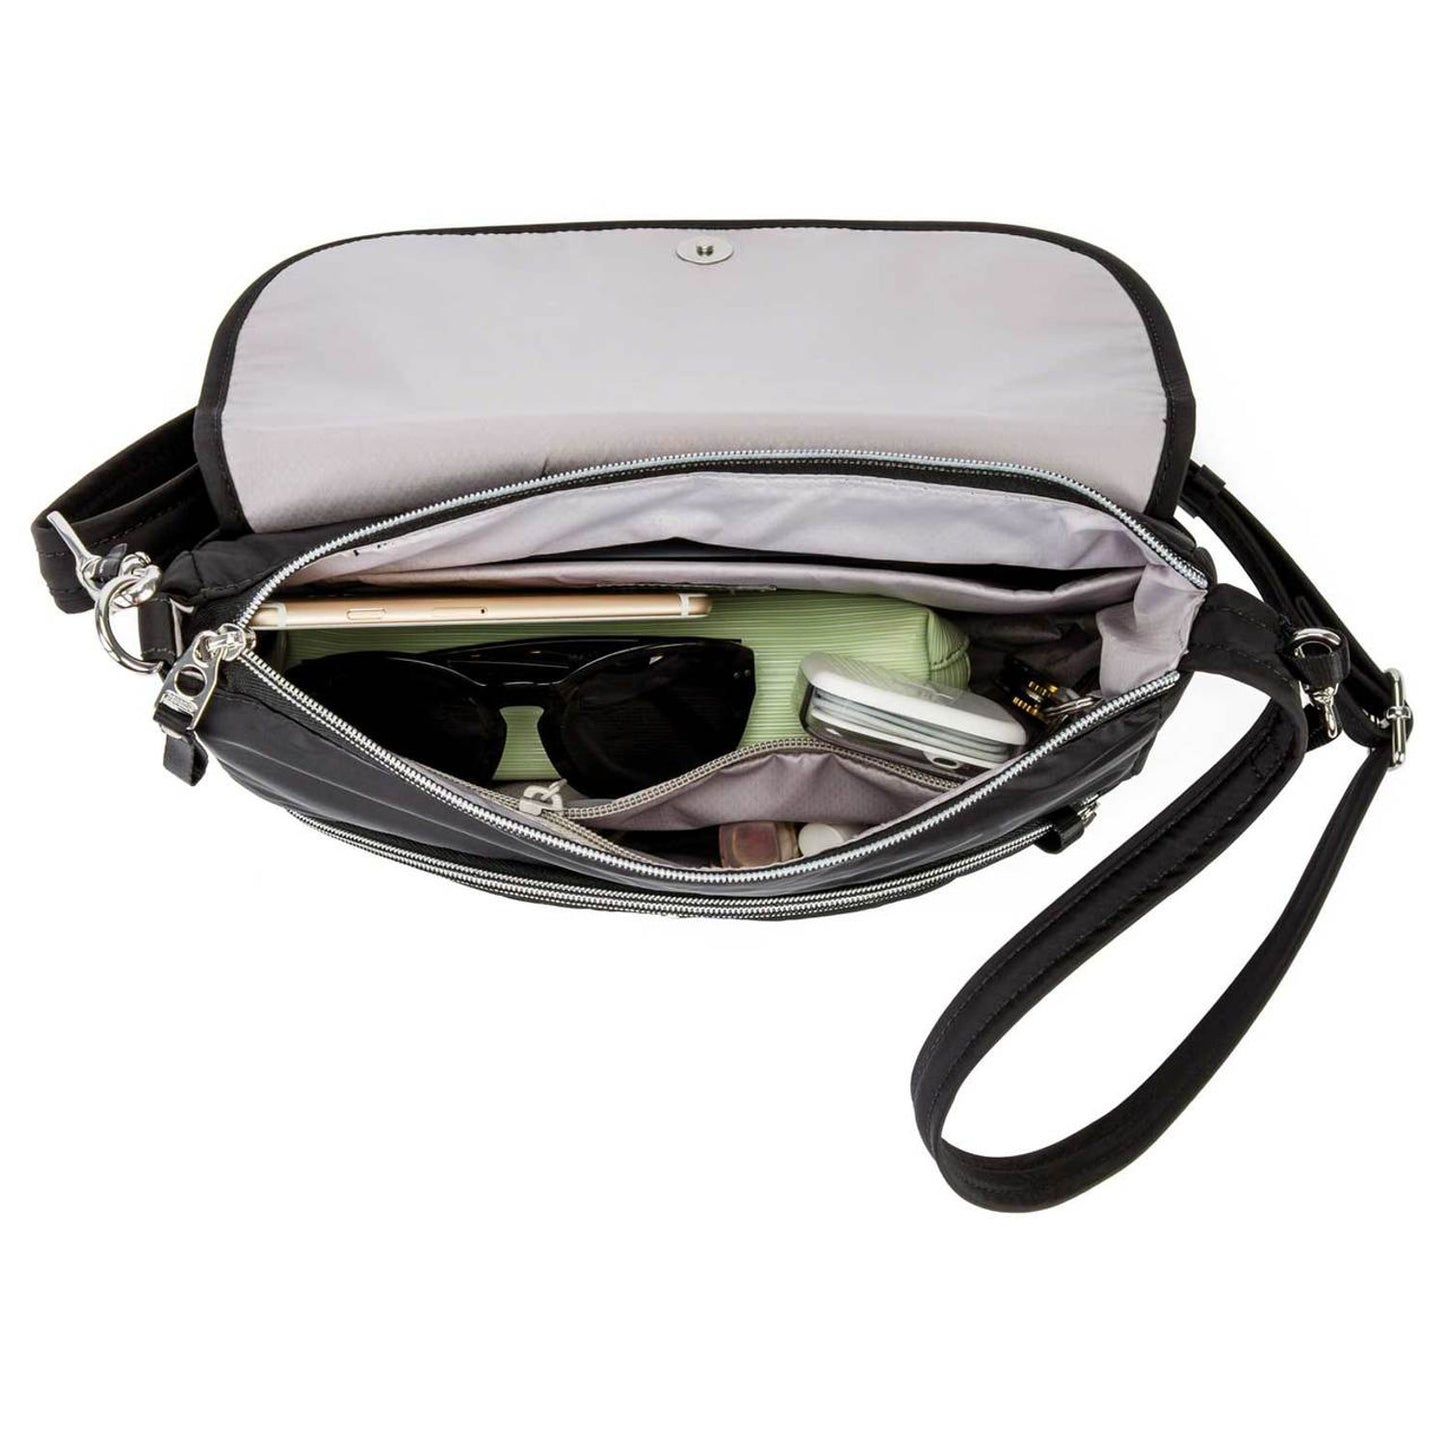 Pacsafe Stylesafe Crossbody anti-theft handbag - Black